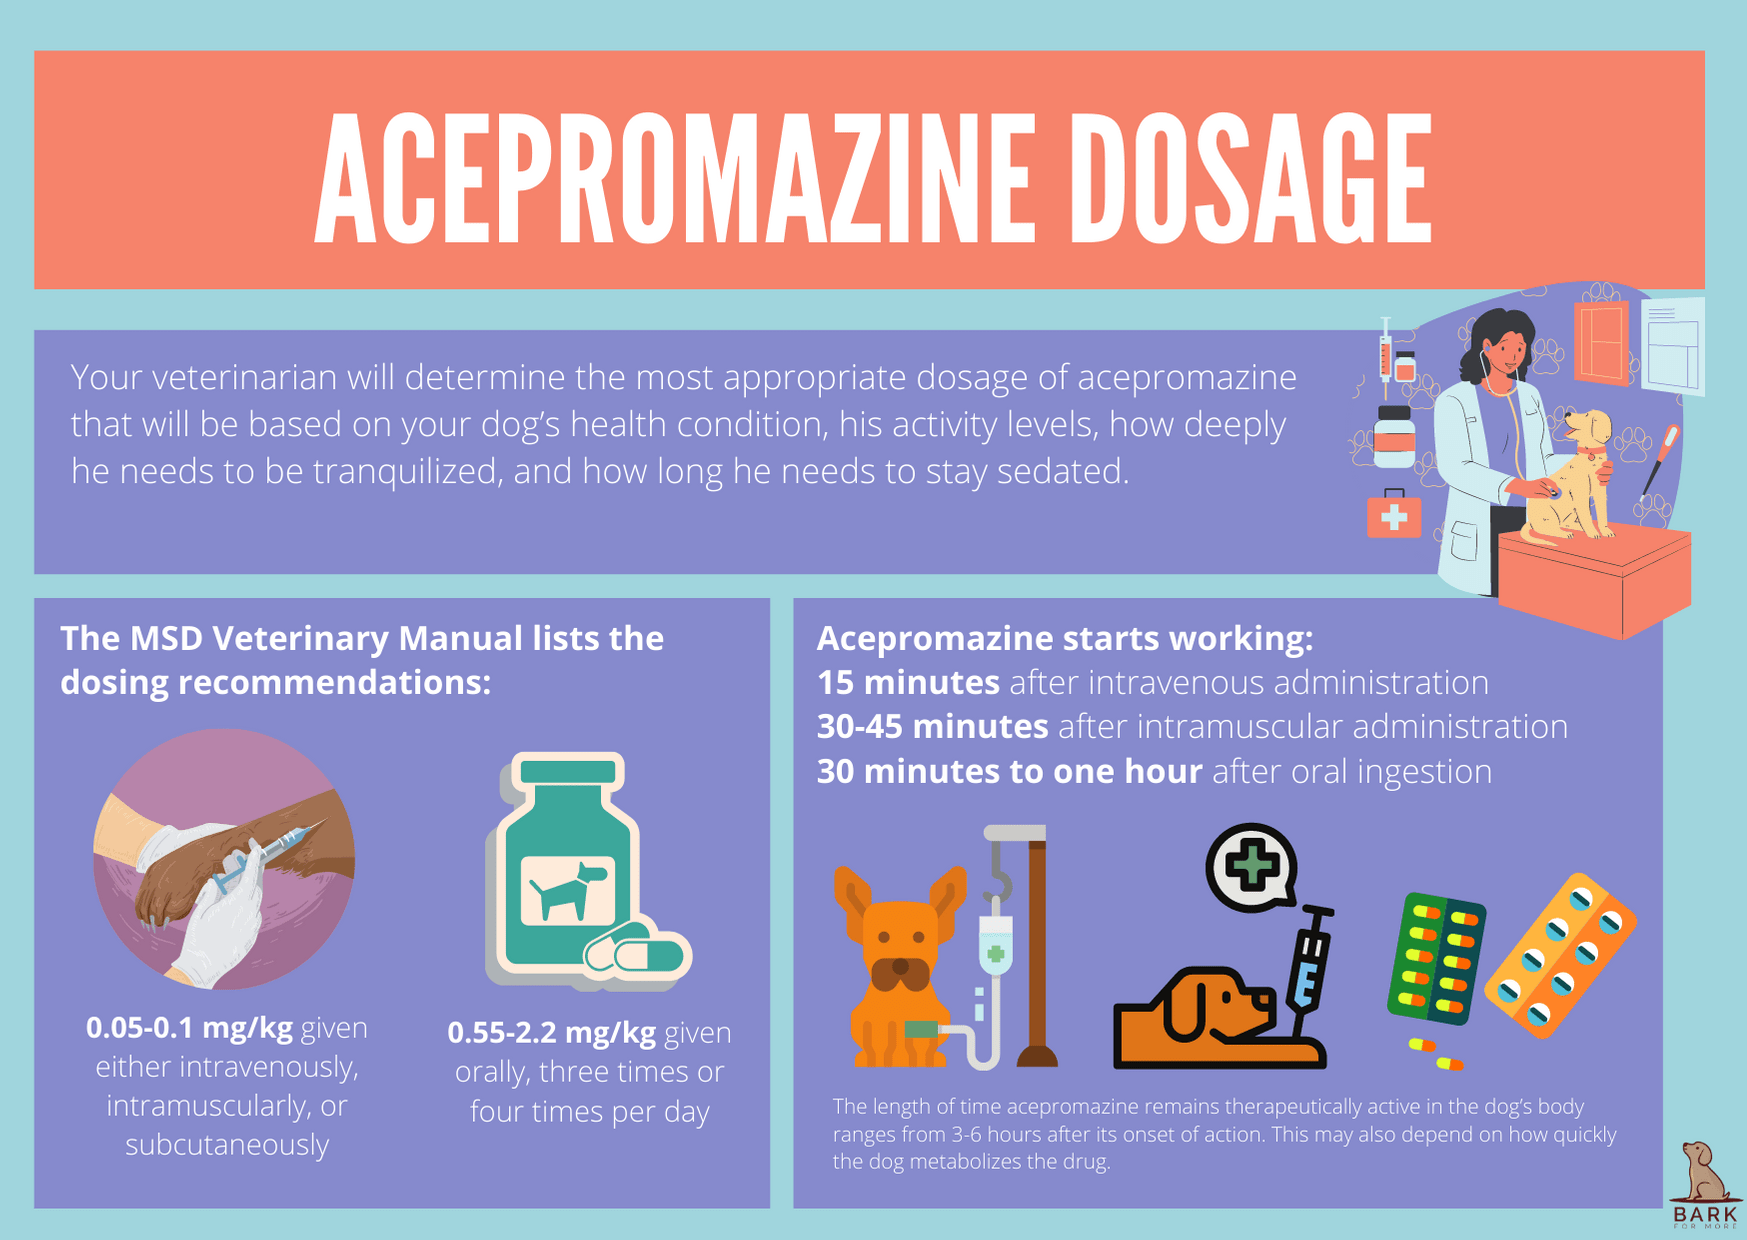 Acepromazine dosage for dogs